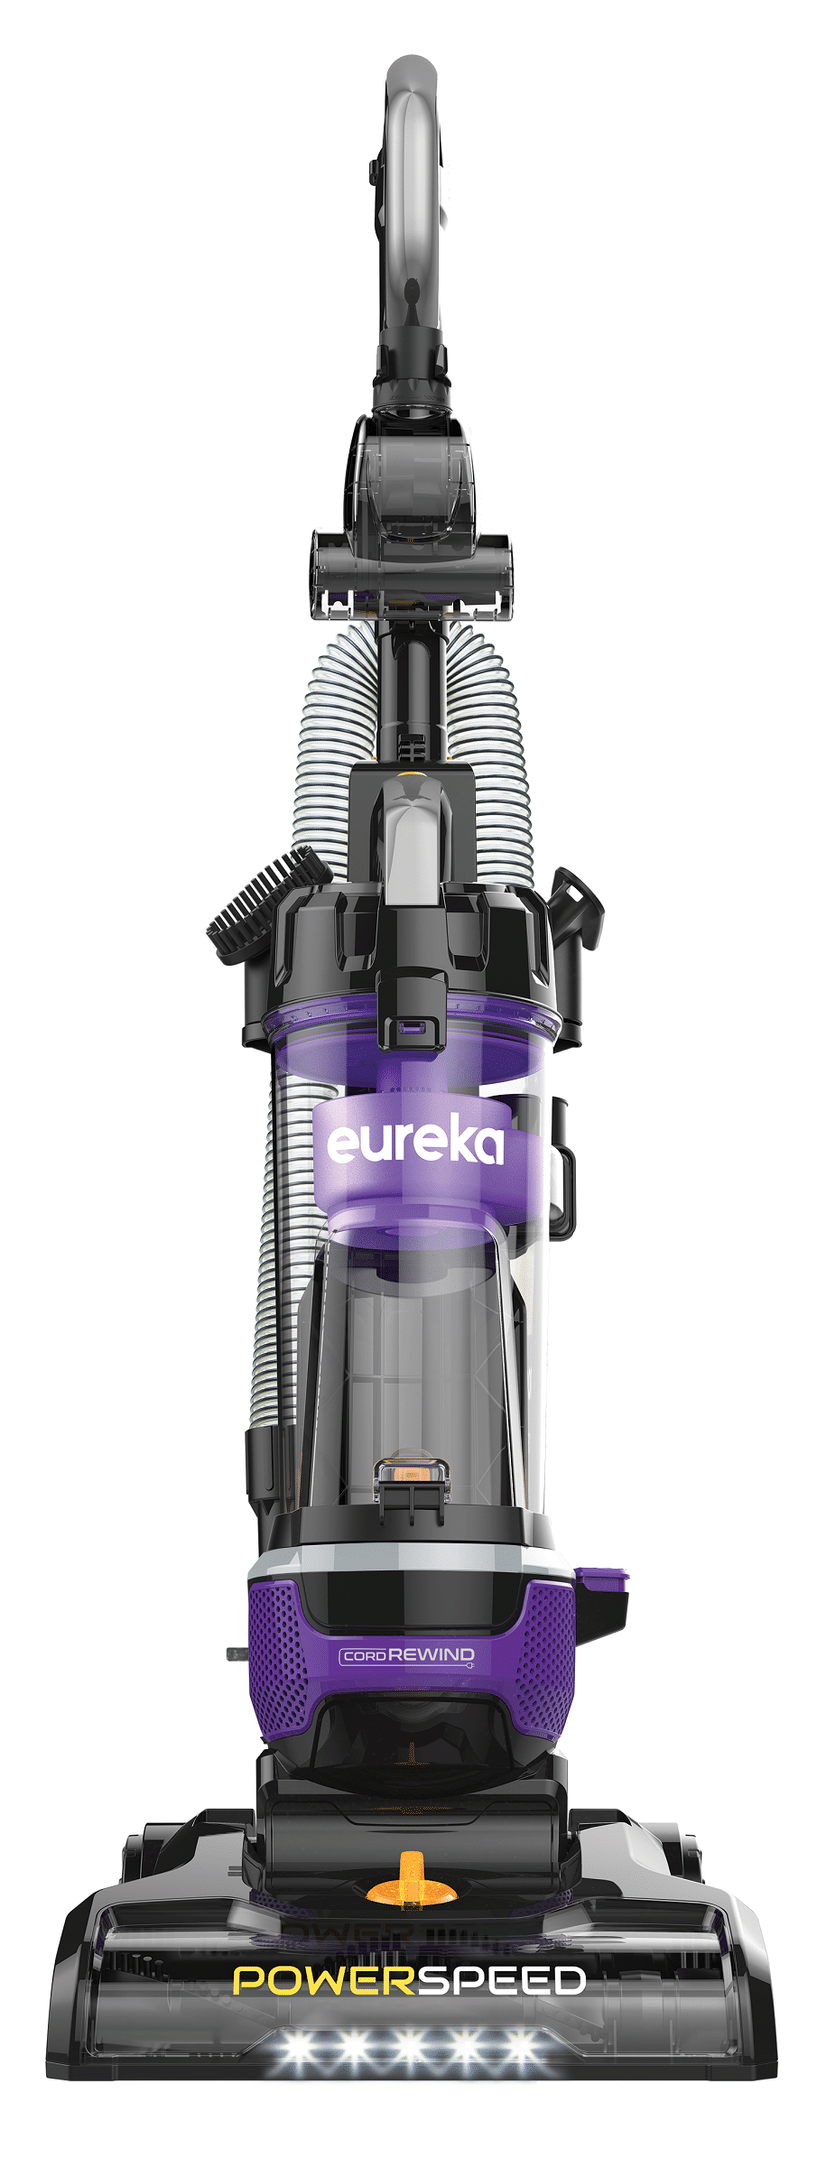 Eureka PowerSpeed Cord Rewind Upright Vacuum Cleaner, NEU203